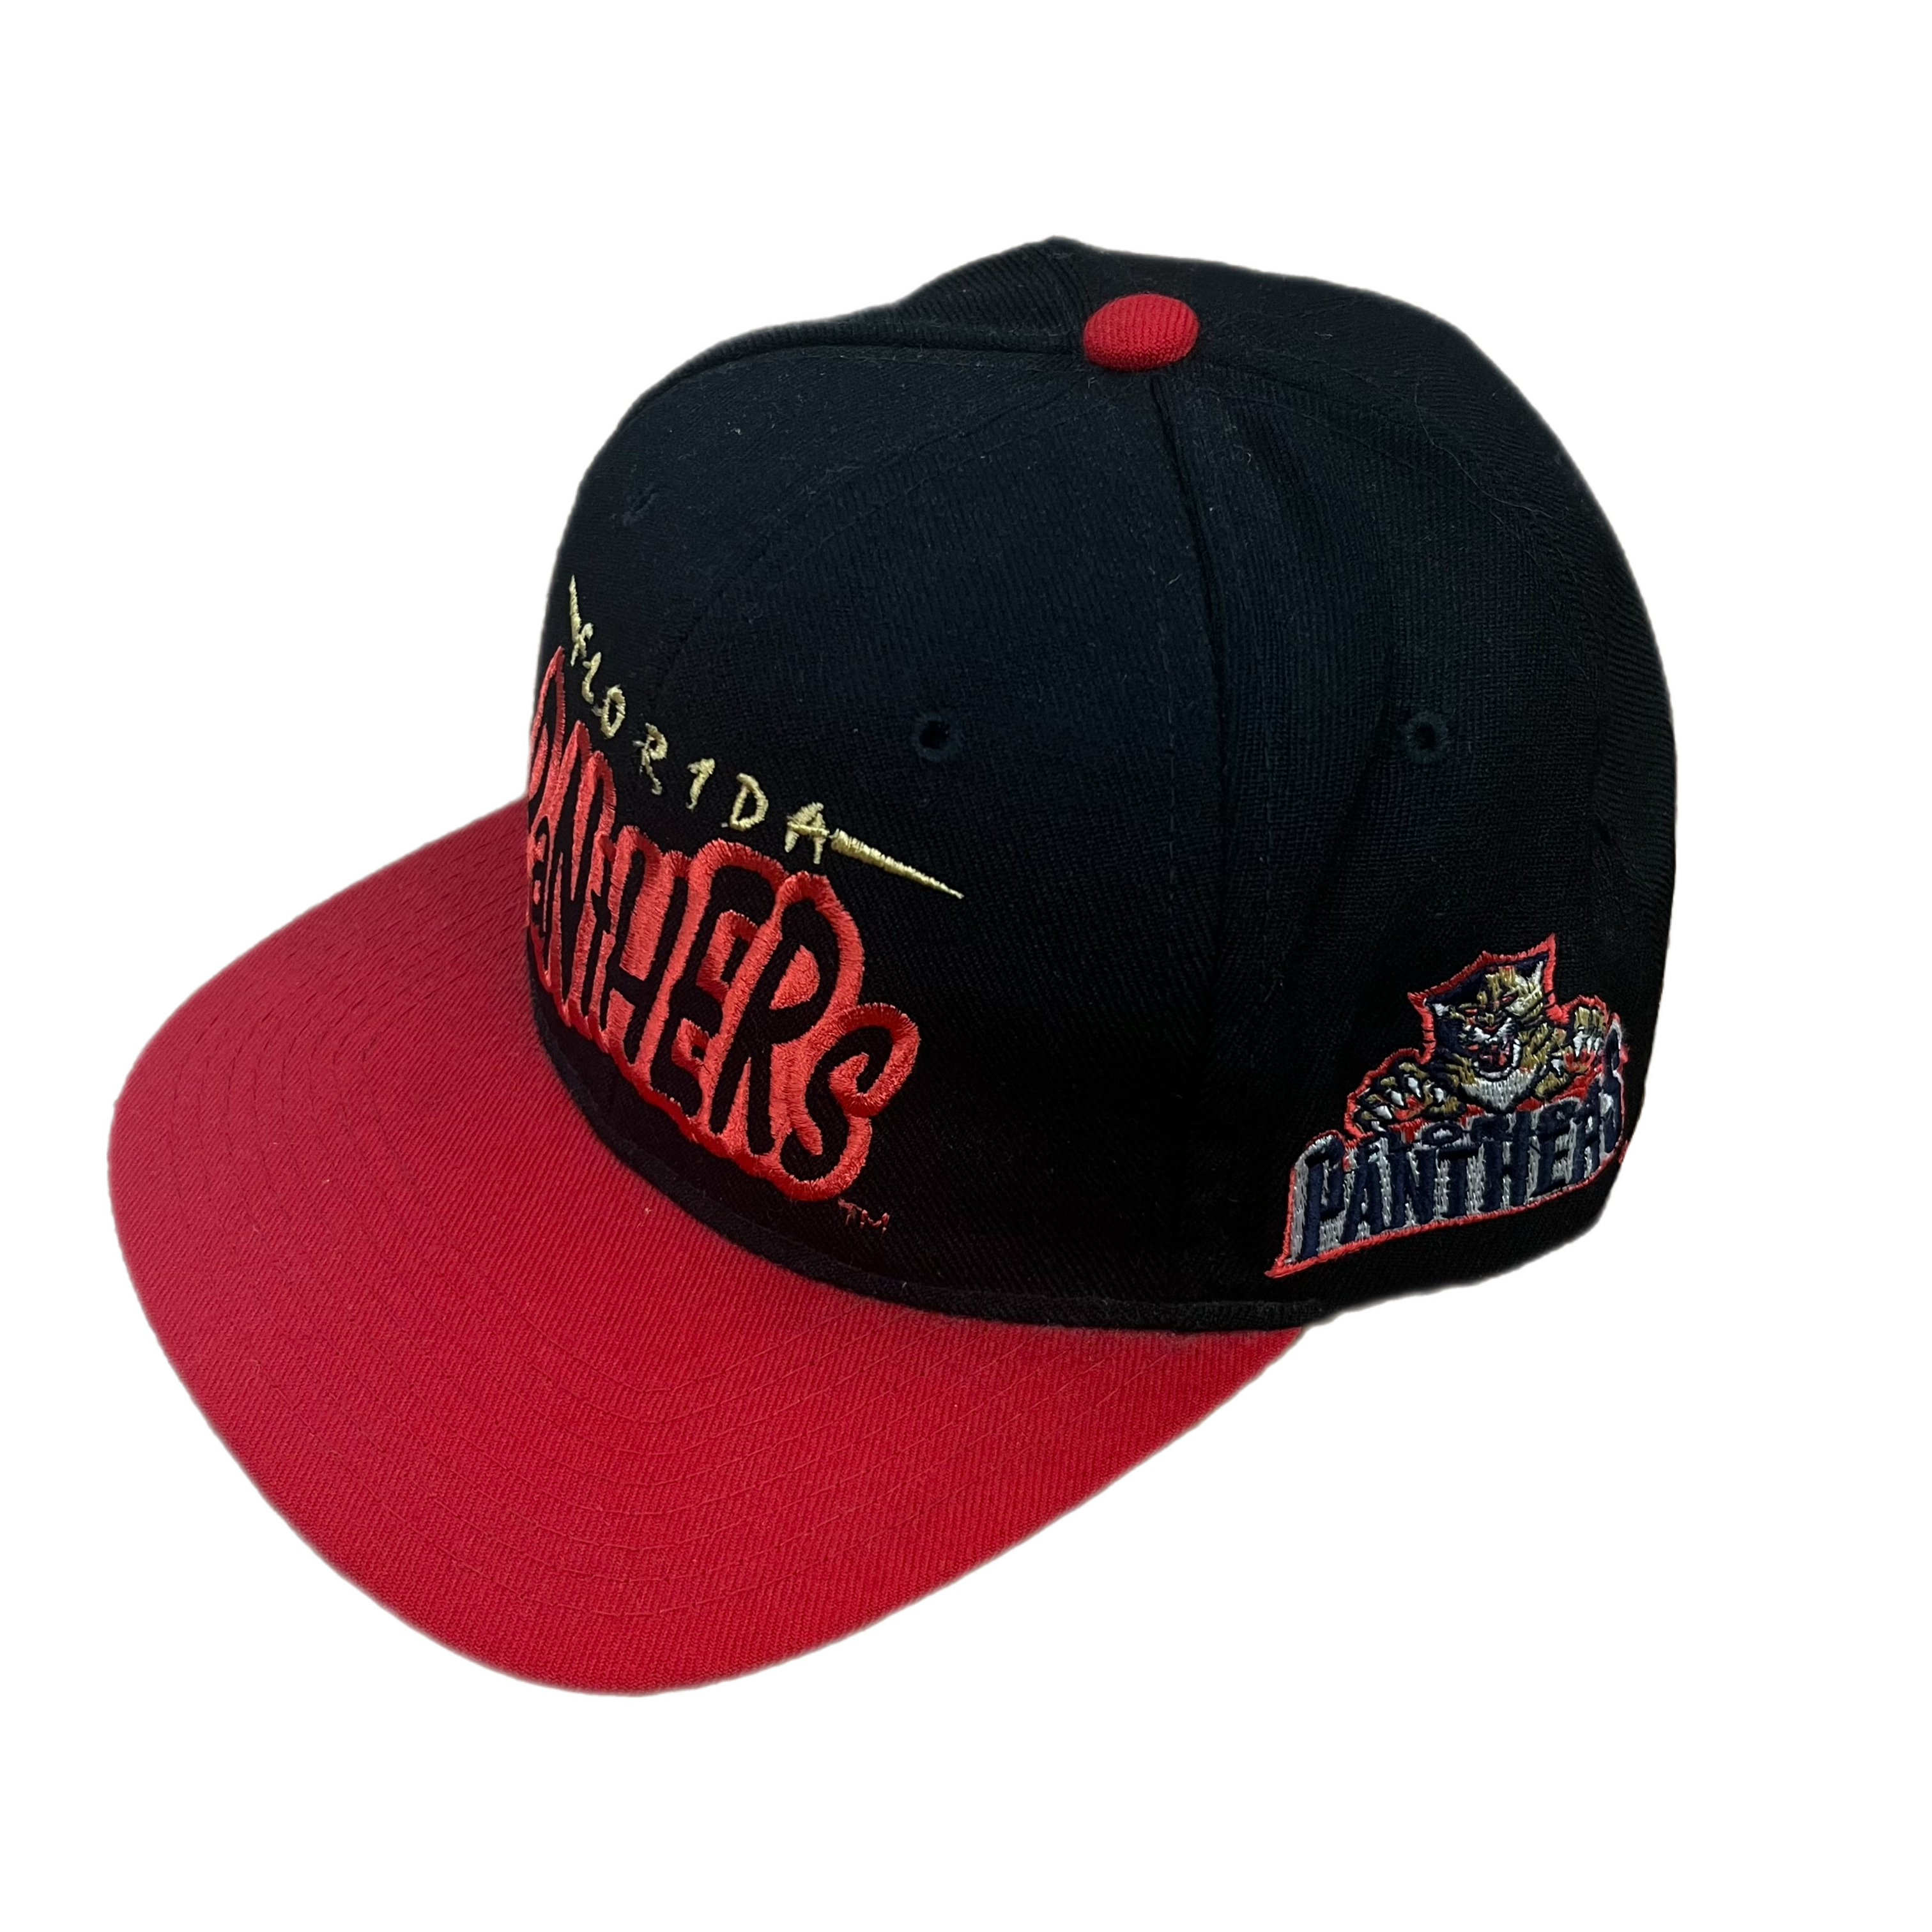 Vintage Florida Panthers Denim Style snapback hat